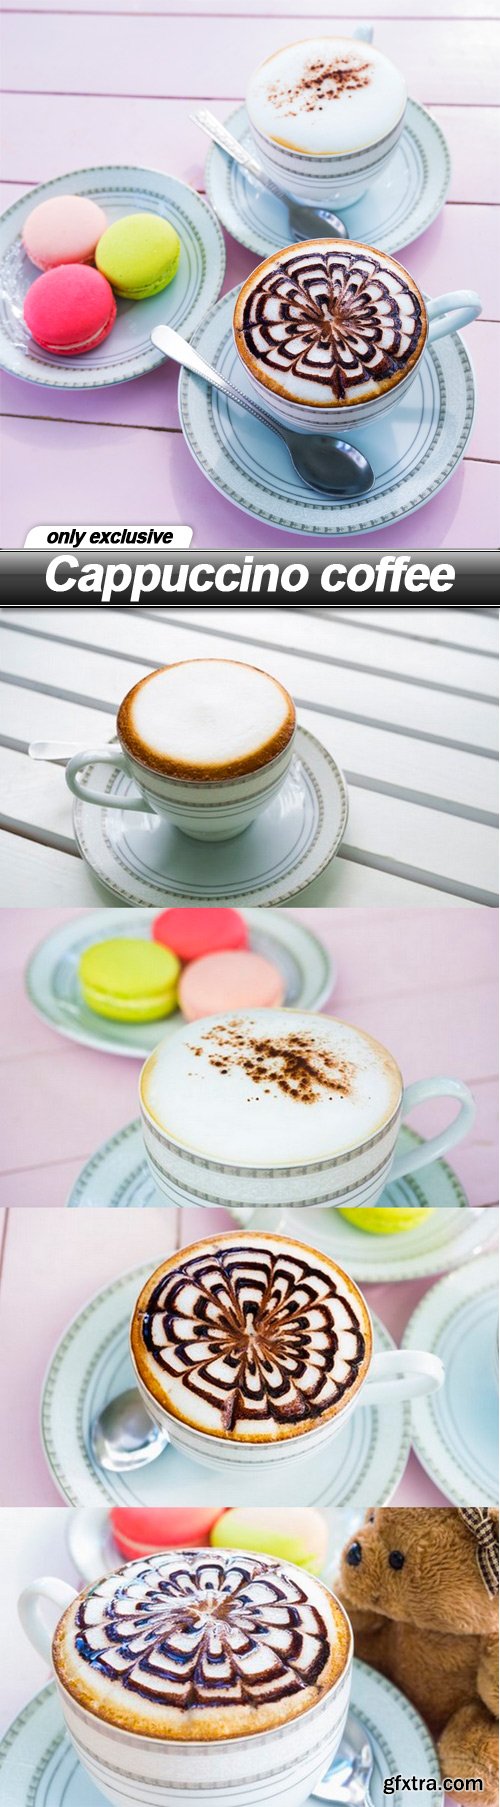 Cappuccino coffee - 5 UHQ JPEG